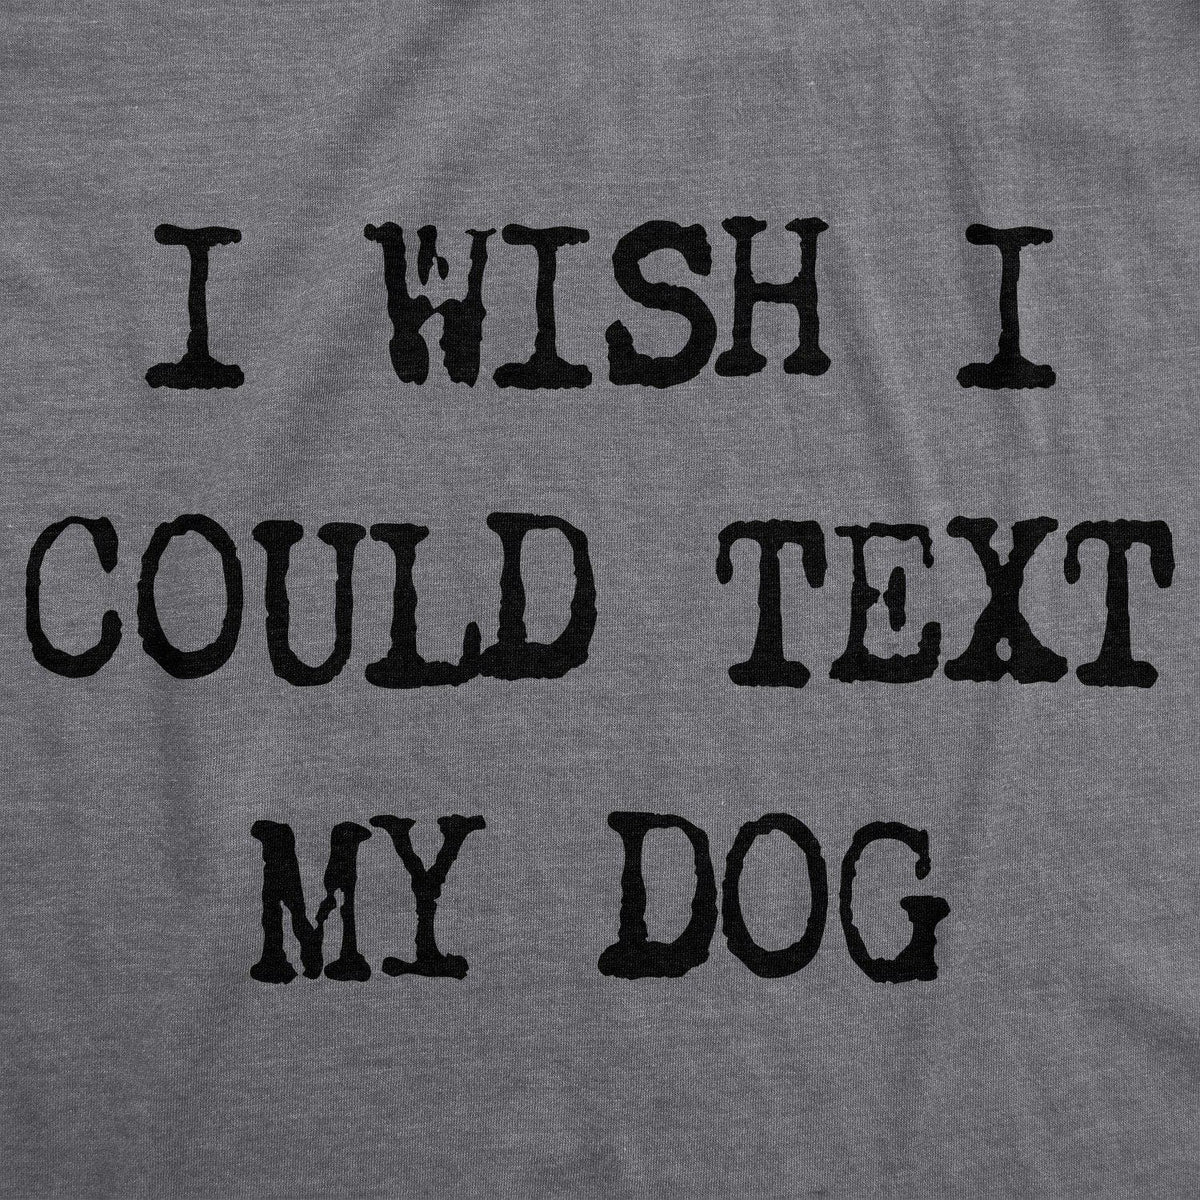 I Wish I Could Text My Dog Women&#39;s Tshirt  -  Crazy Dog T-Shirts